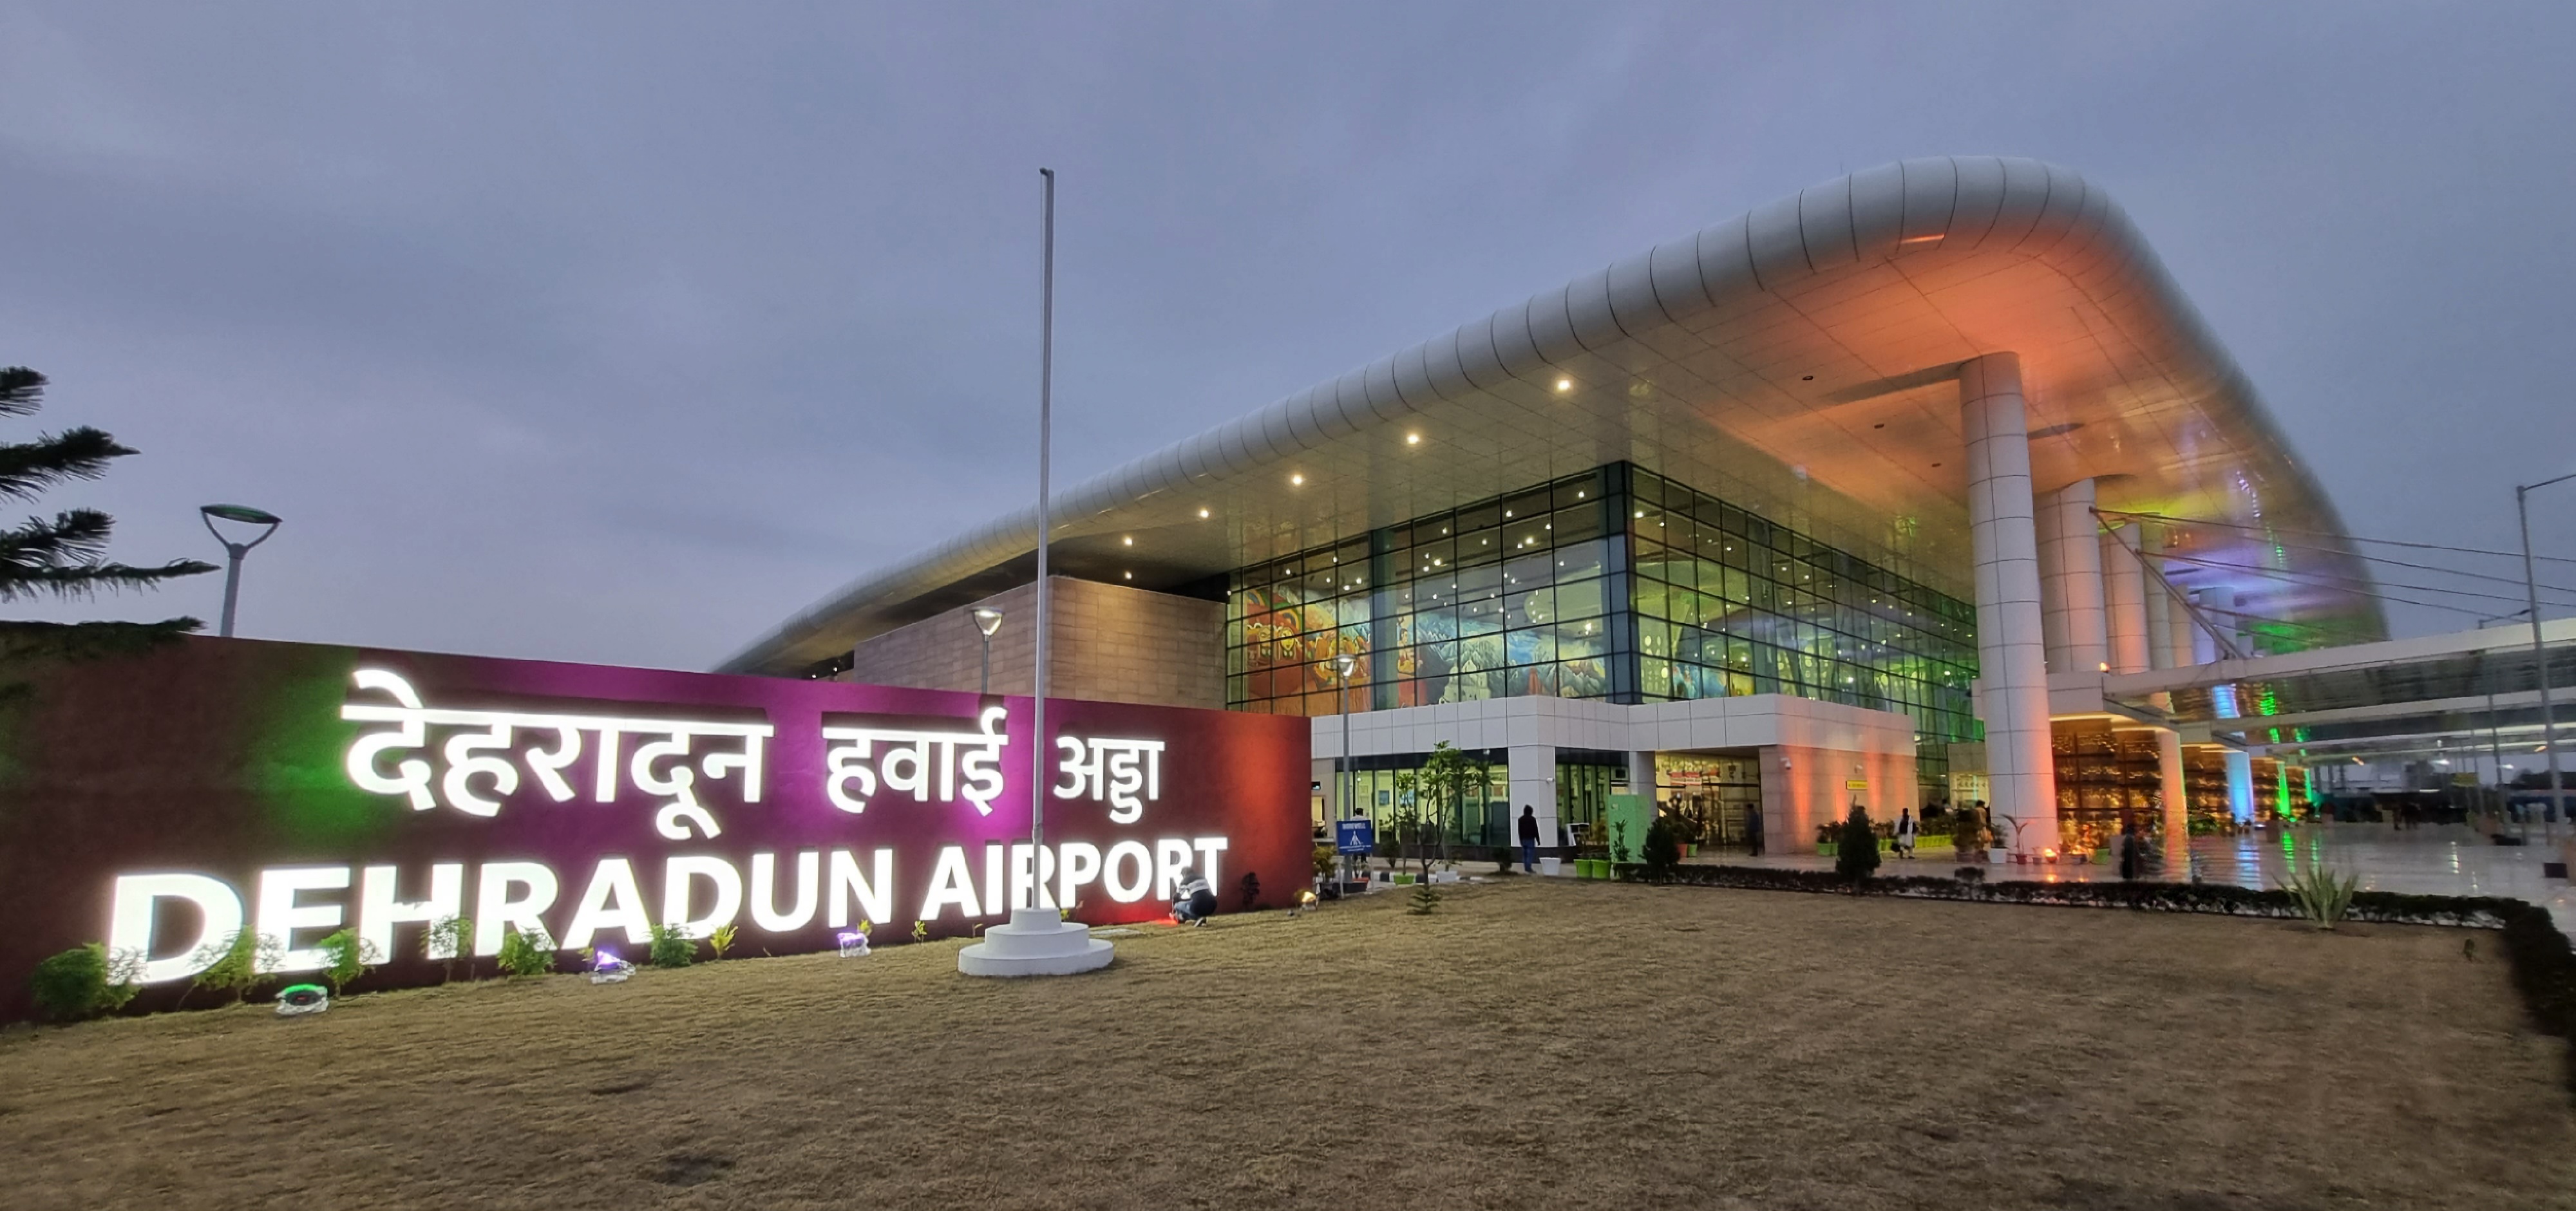 dehradun Airport to Dehradun taxi